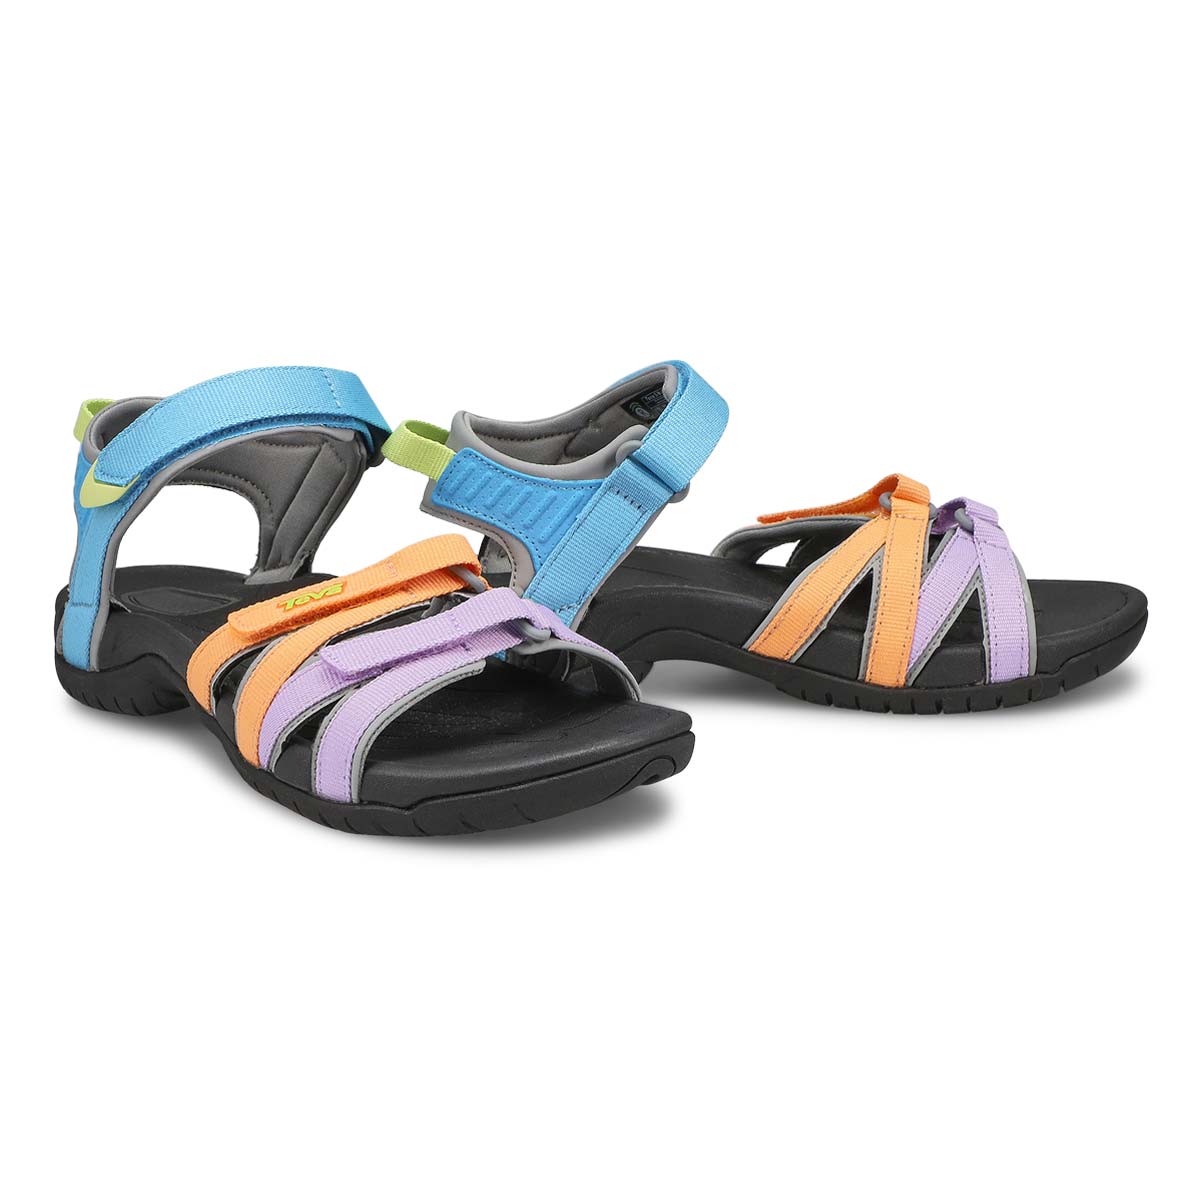 Teva Women's Tirra Sport Sandal - Wind Multi | SoftMoc.com